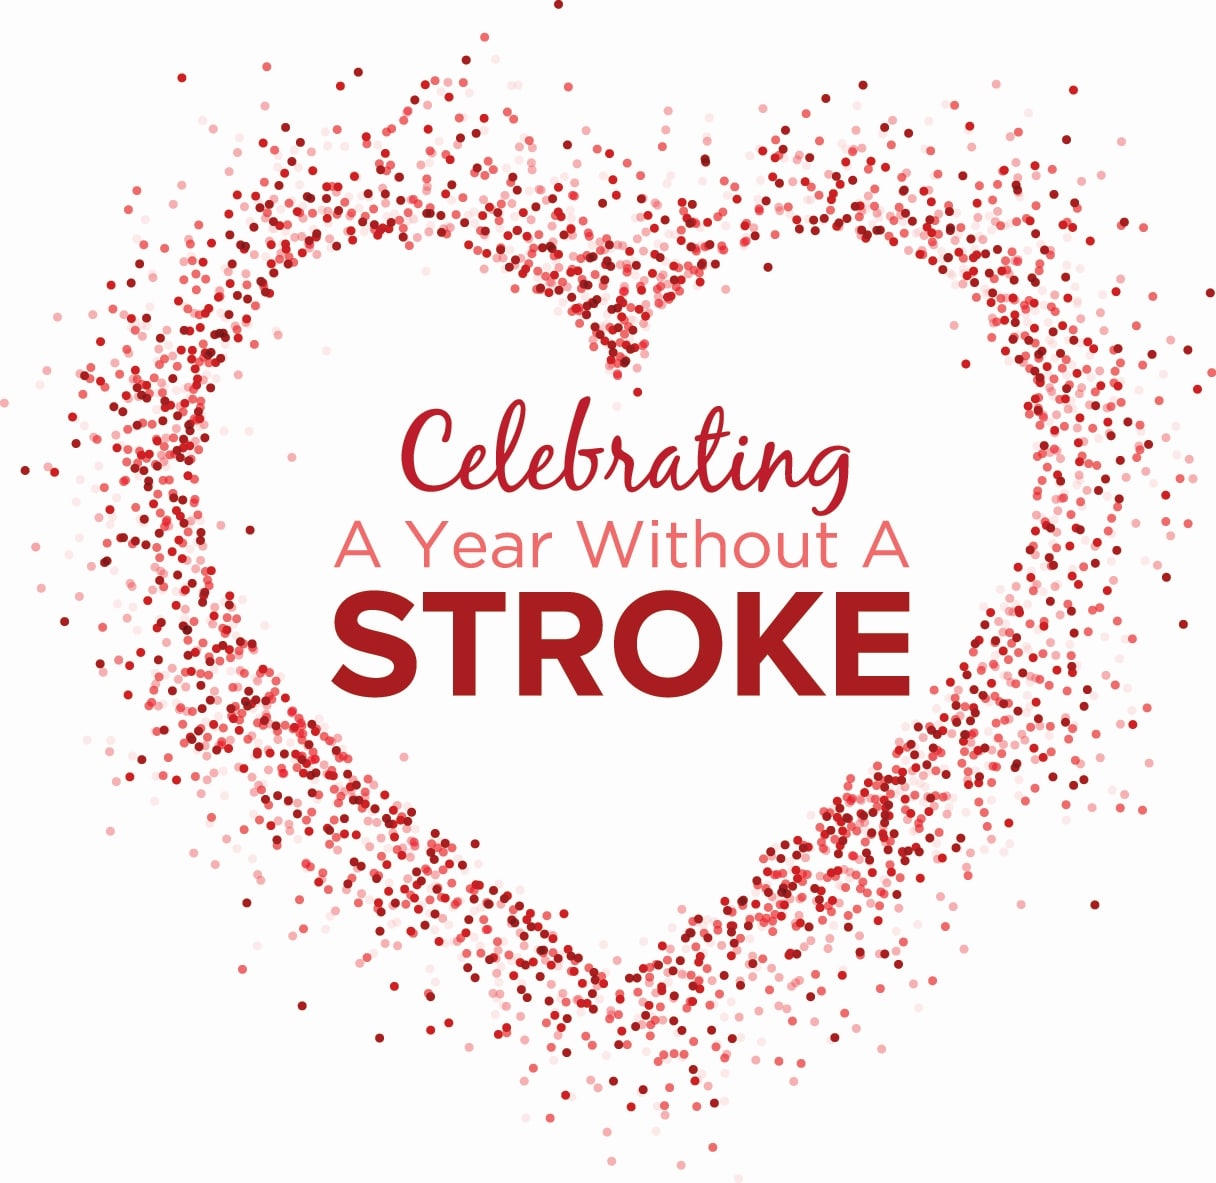 Celebrating a Year Without a Stroke logo.